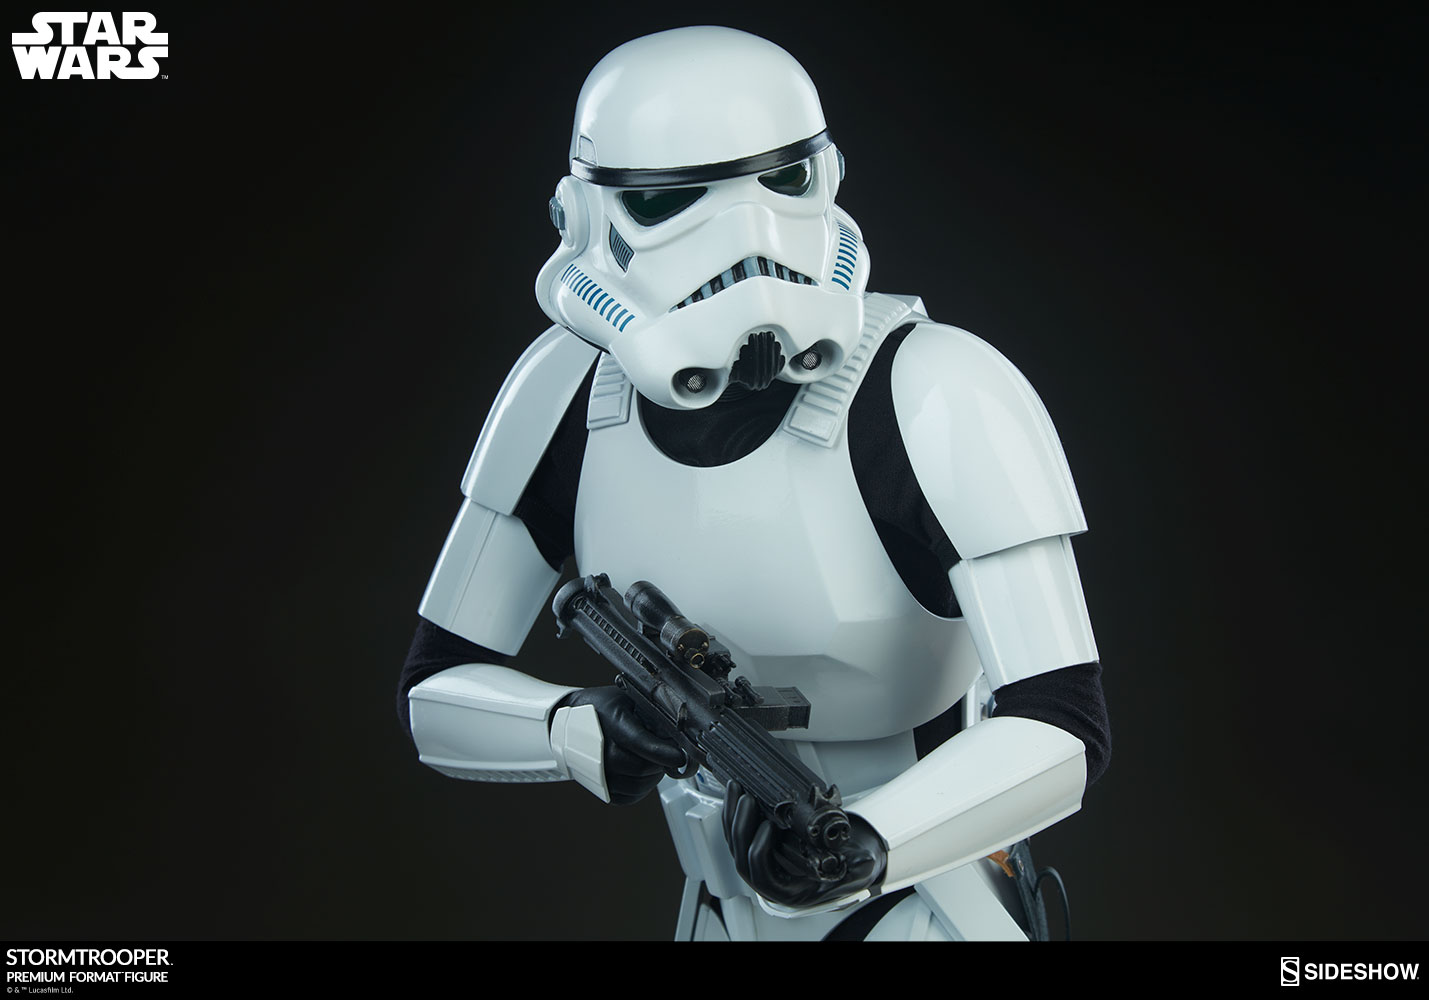 star wars stormtrooper wallpaper,toy,action figure,3d modeling,arm,robot